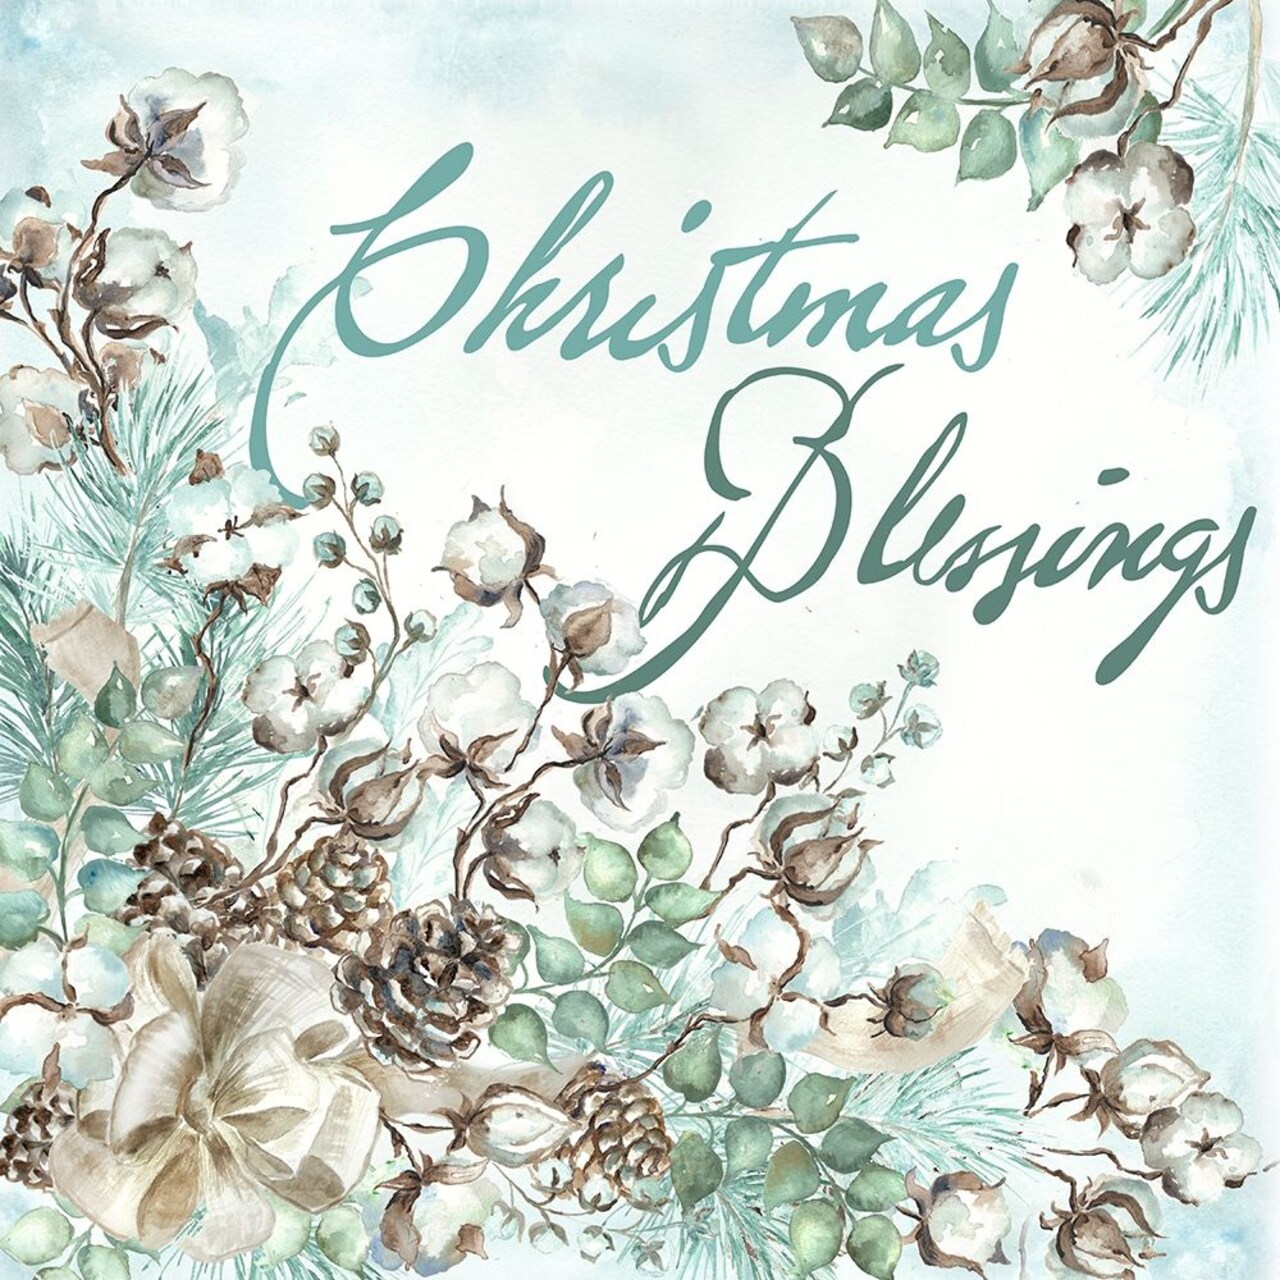 Christmas Blessings Cotton Boll Square Poster Print by Tre Sorelle Studios - Item # VARPDXRB11433TS